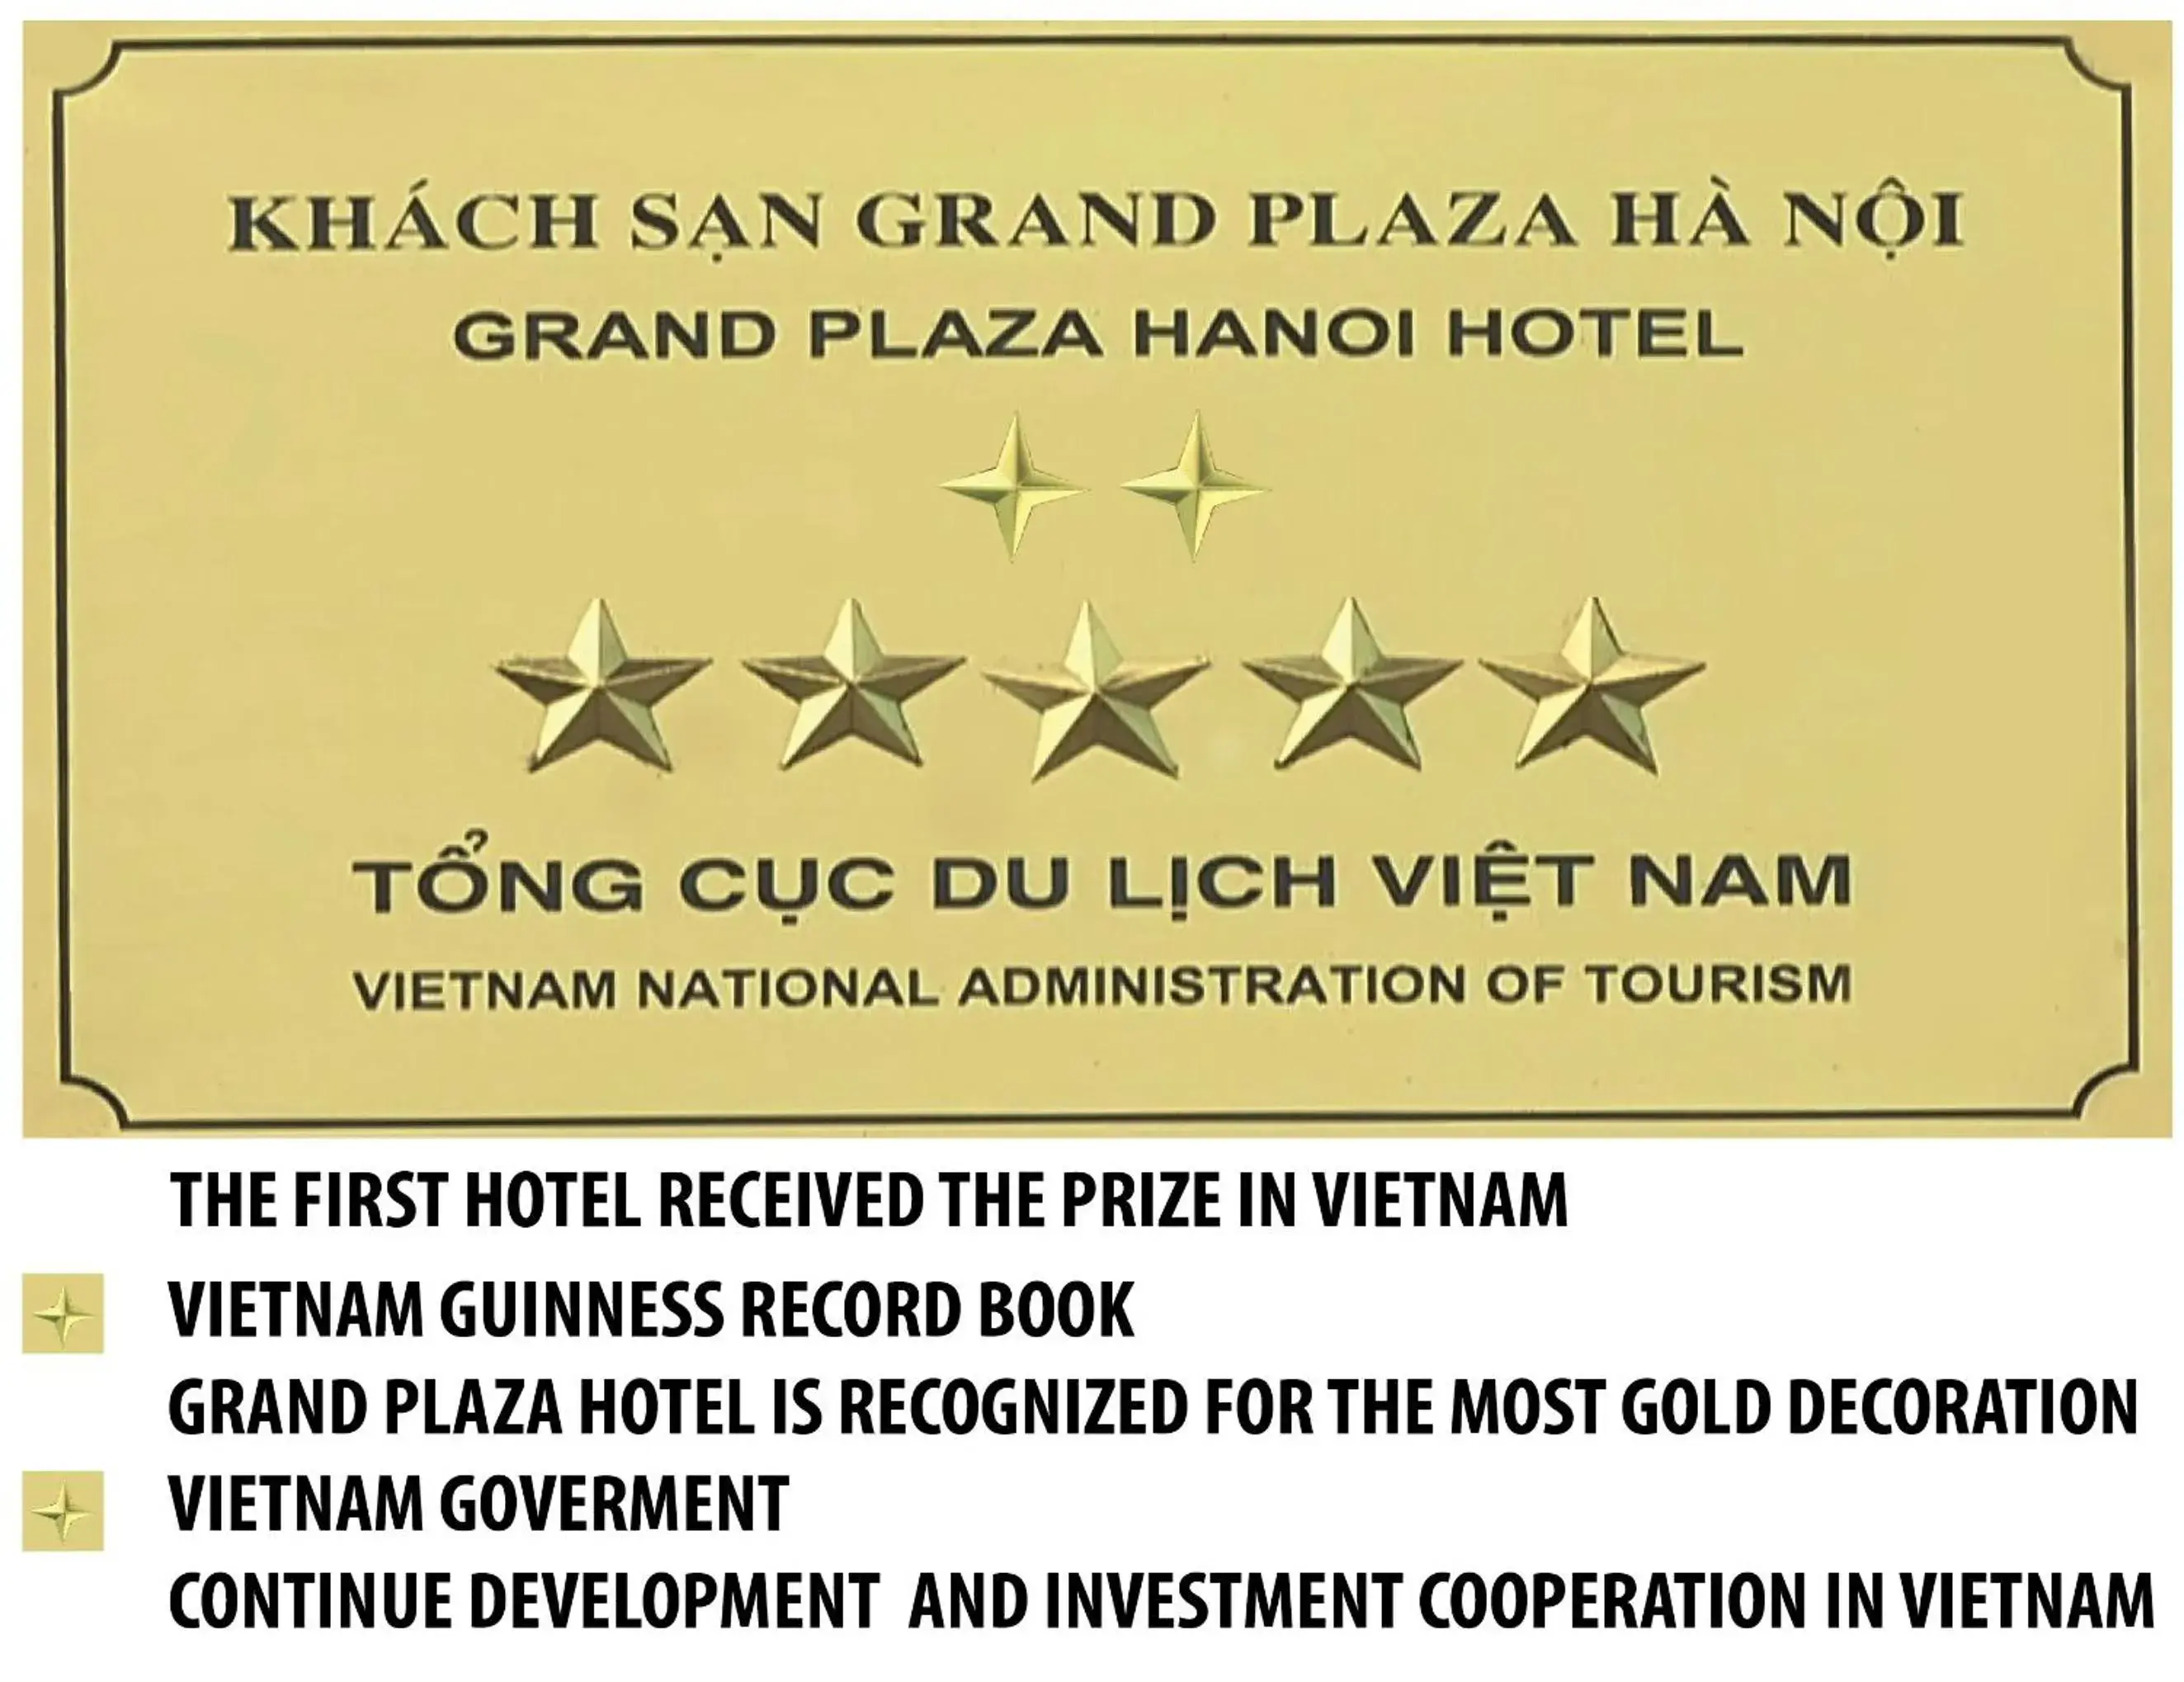 Decorative detail in Grand Plaza Hanoi Hotel